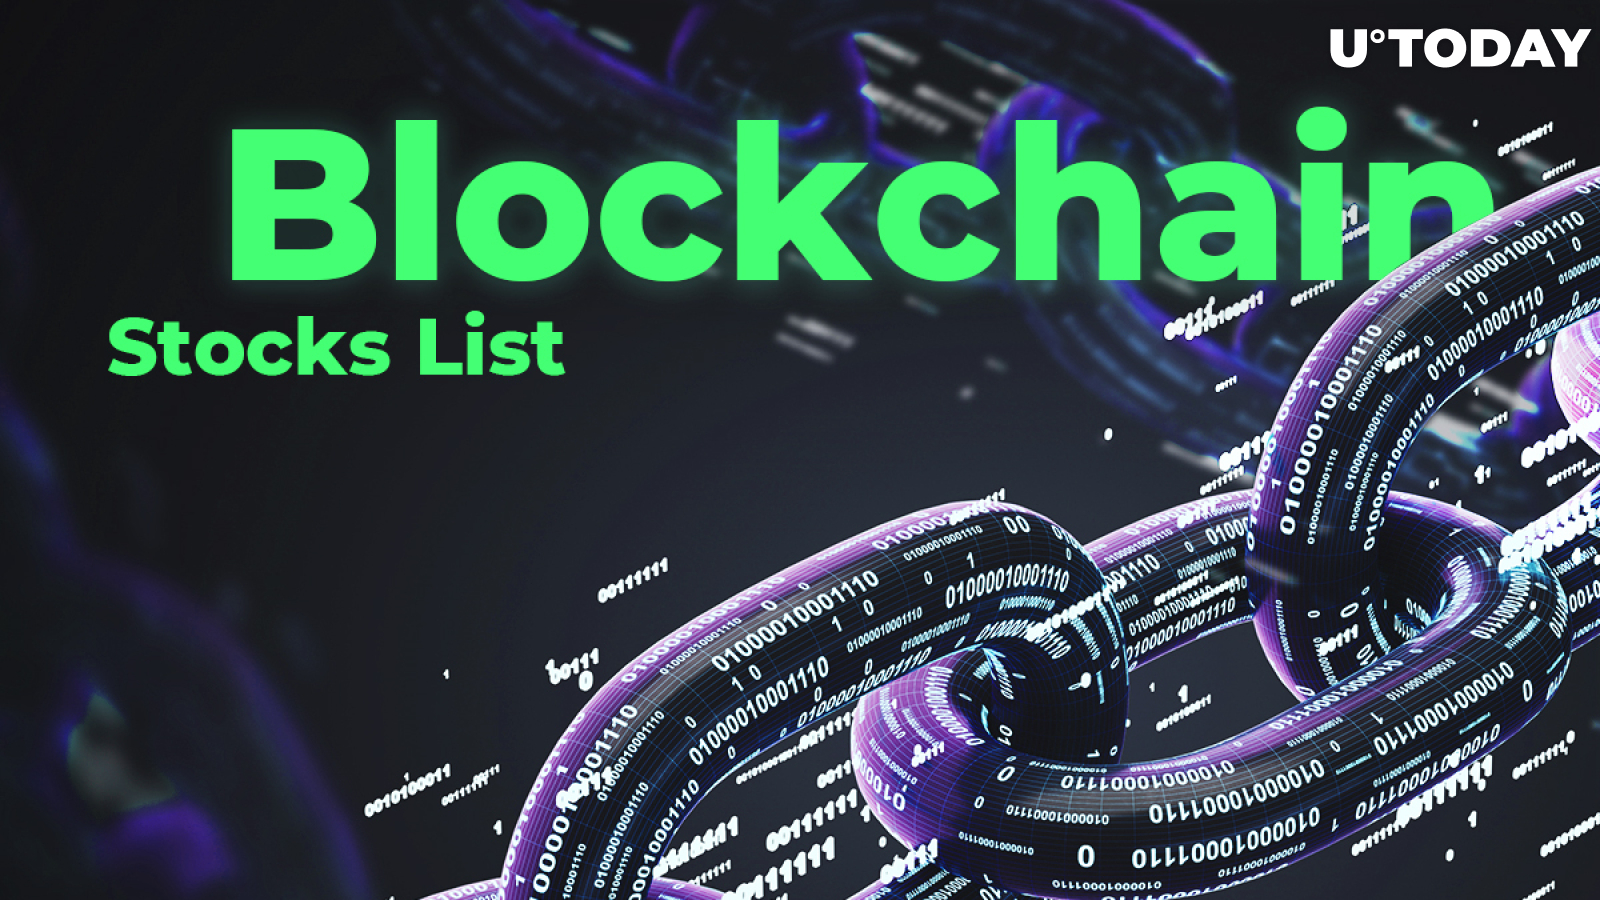 Blockchain Stocks List [Stocks to Watch in 2019]